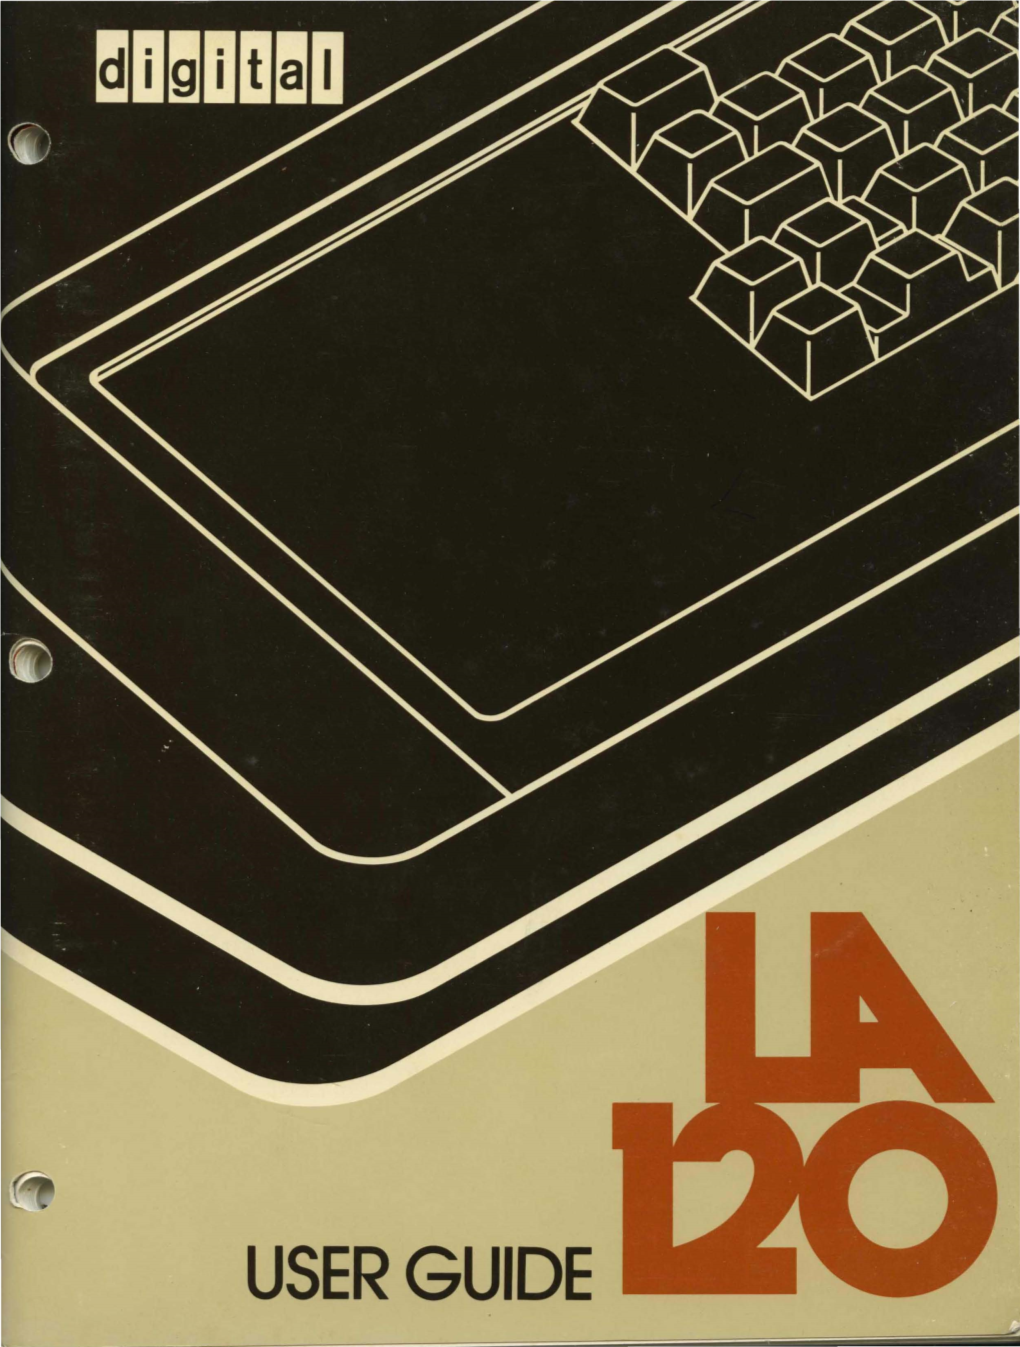 USER GUIDE EK-LA120-UG-003 ' 1 St Edition, September 1978 2Nd Edition, January 1979 3Rd Edition, June 1979